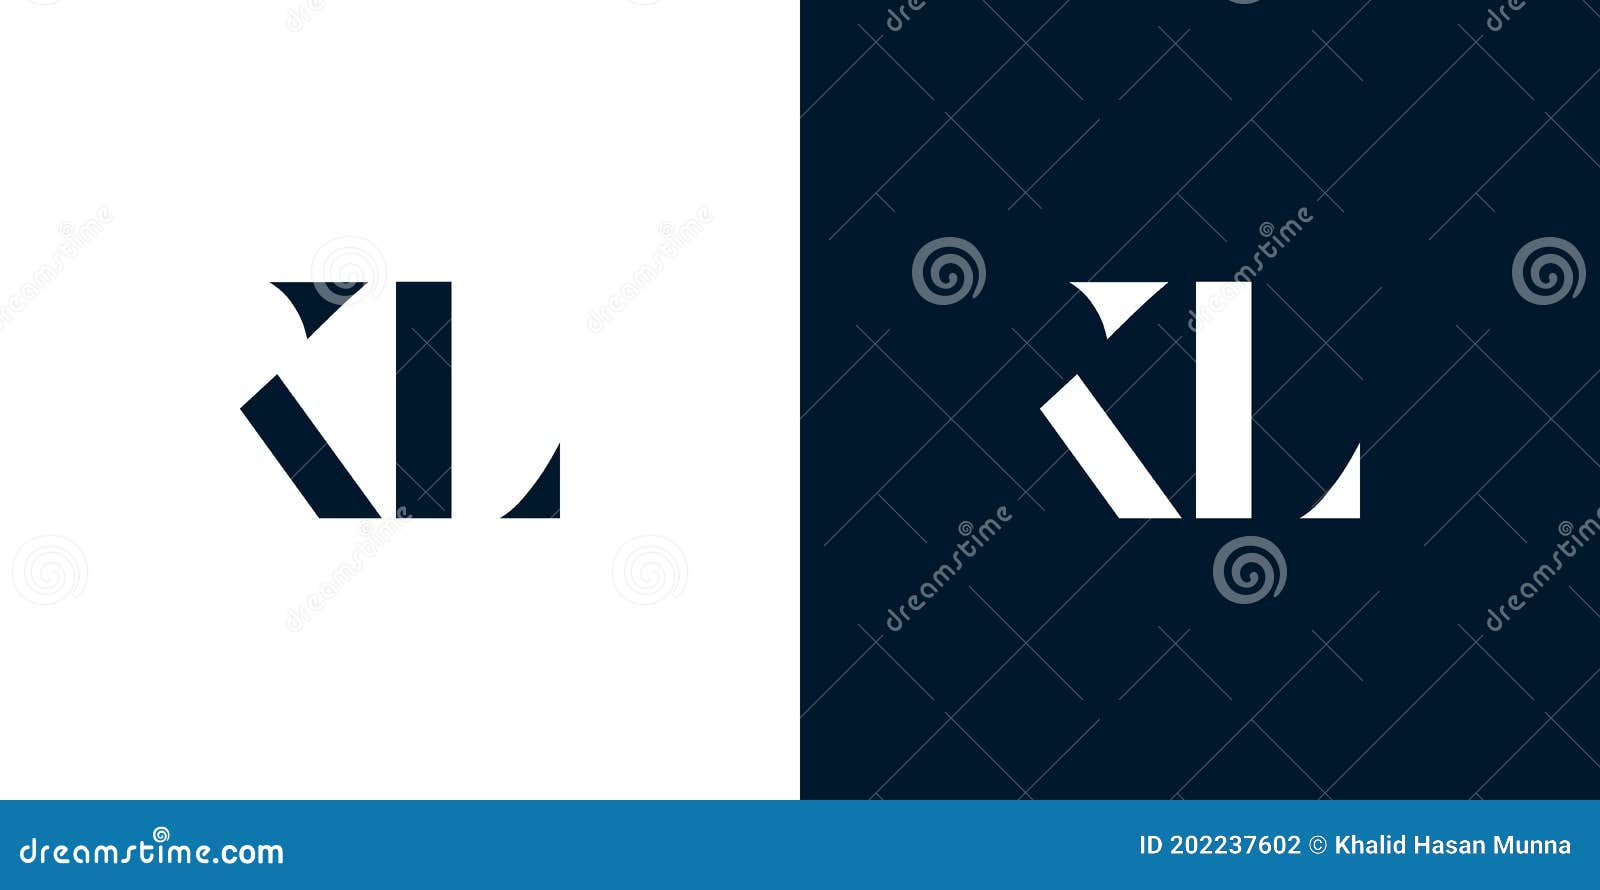 Share 108+ kl logo latest